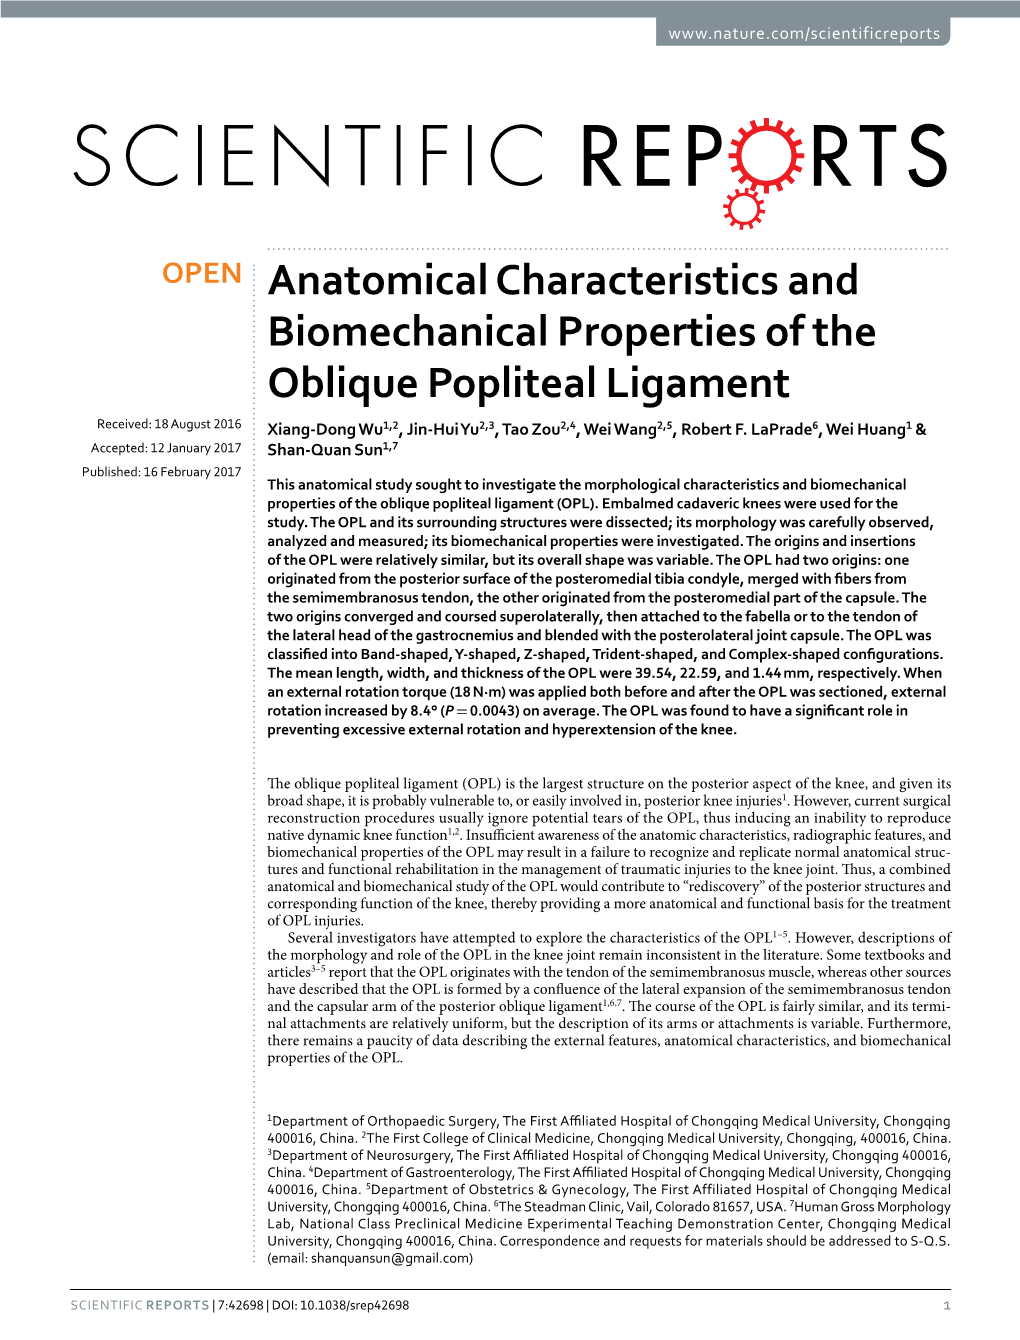 Anatomical Characteristics and Biomechanical Properties of The